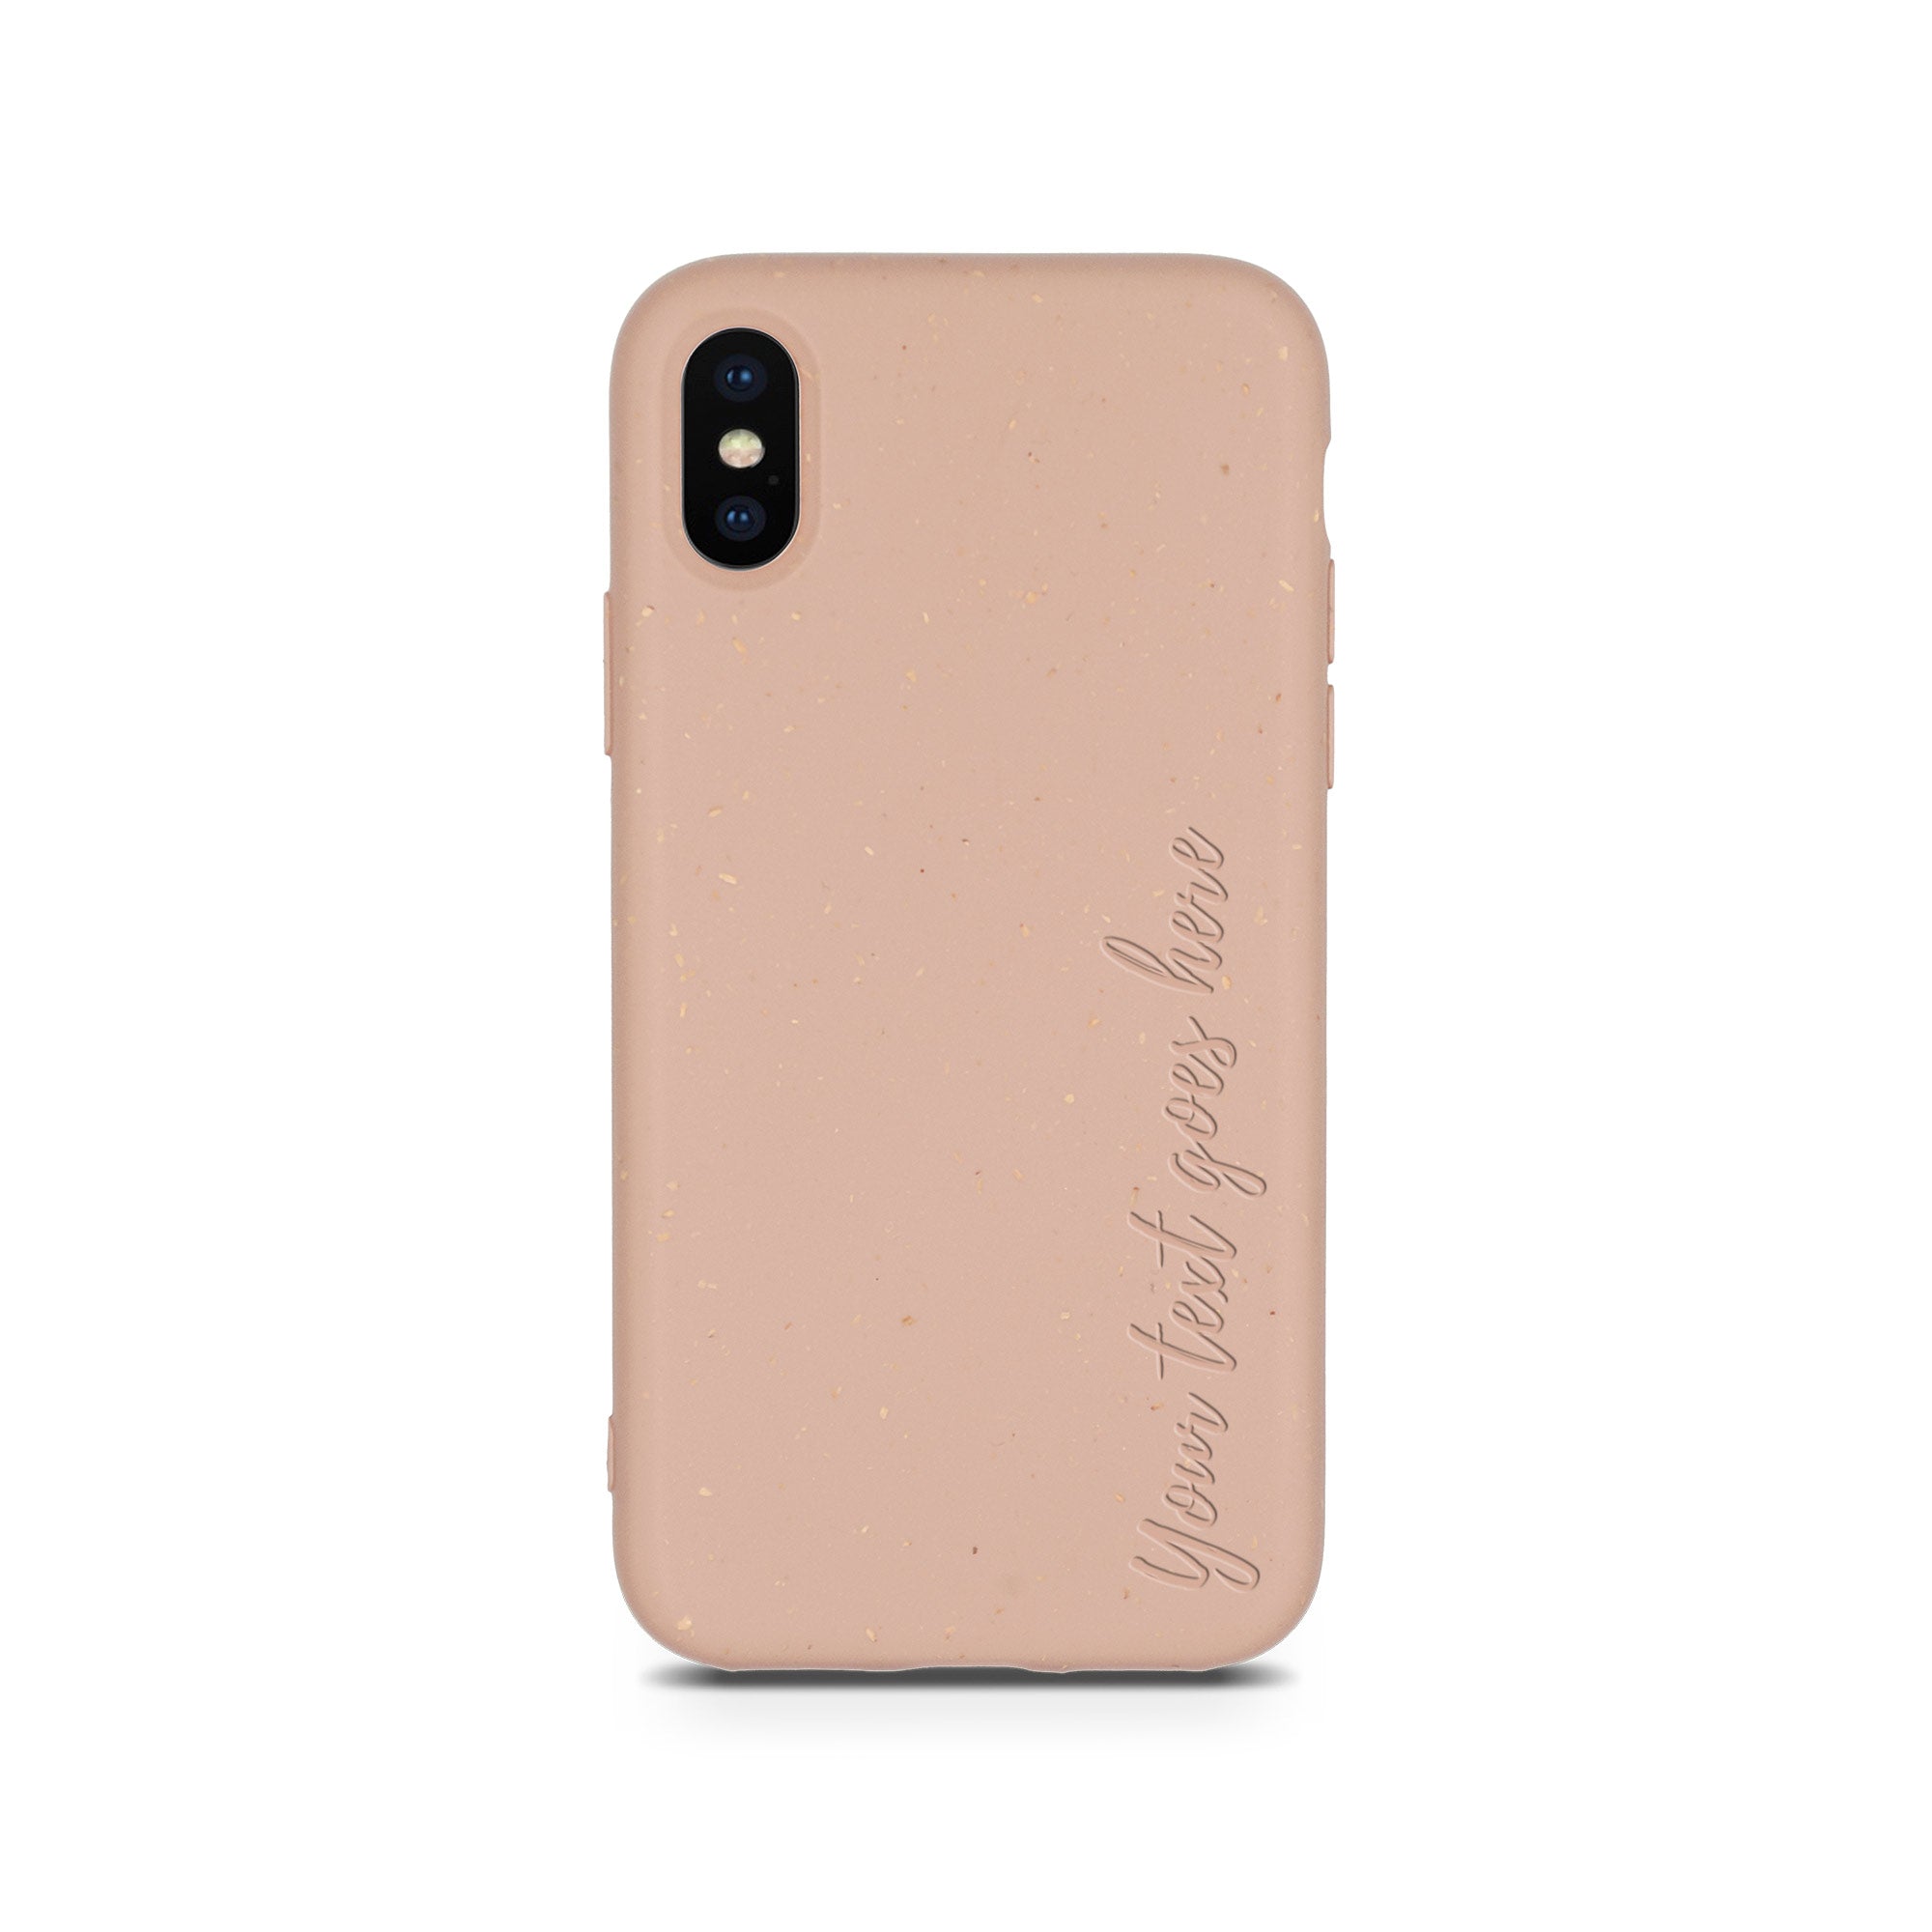 Texto personalizado vertical en funda para iPhone x rosa pastel biodegradable